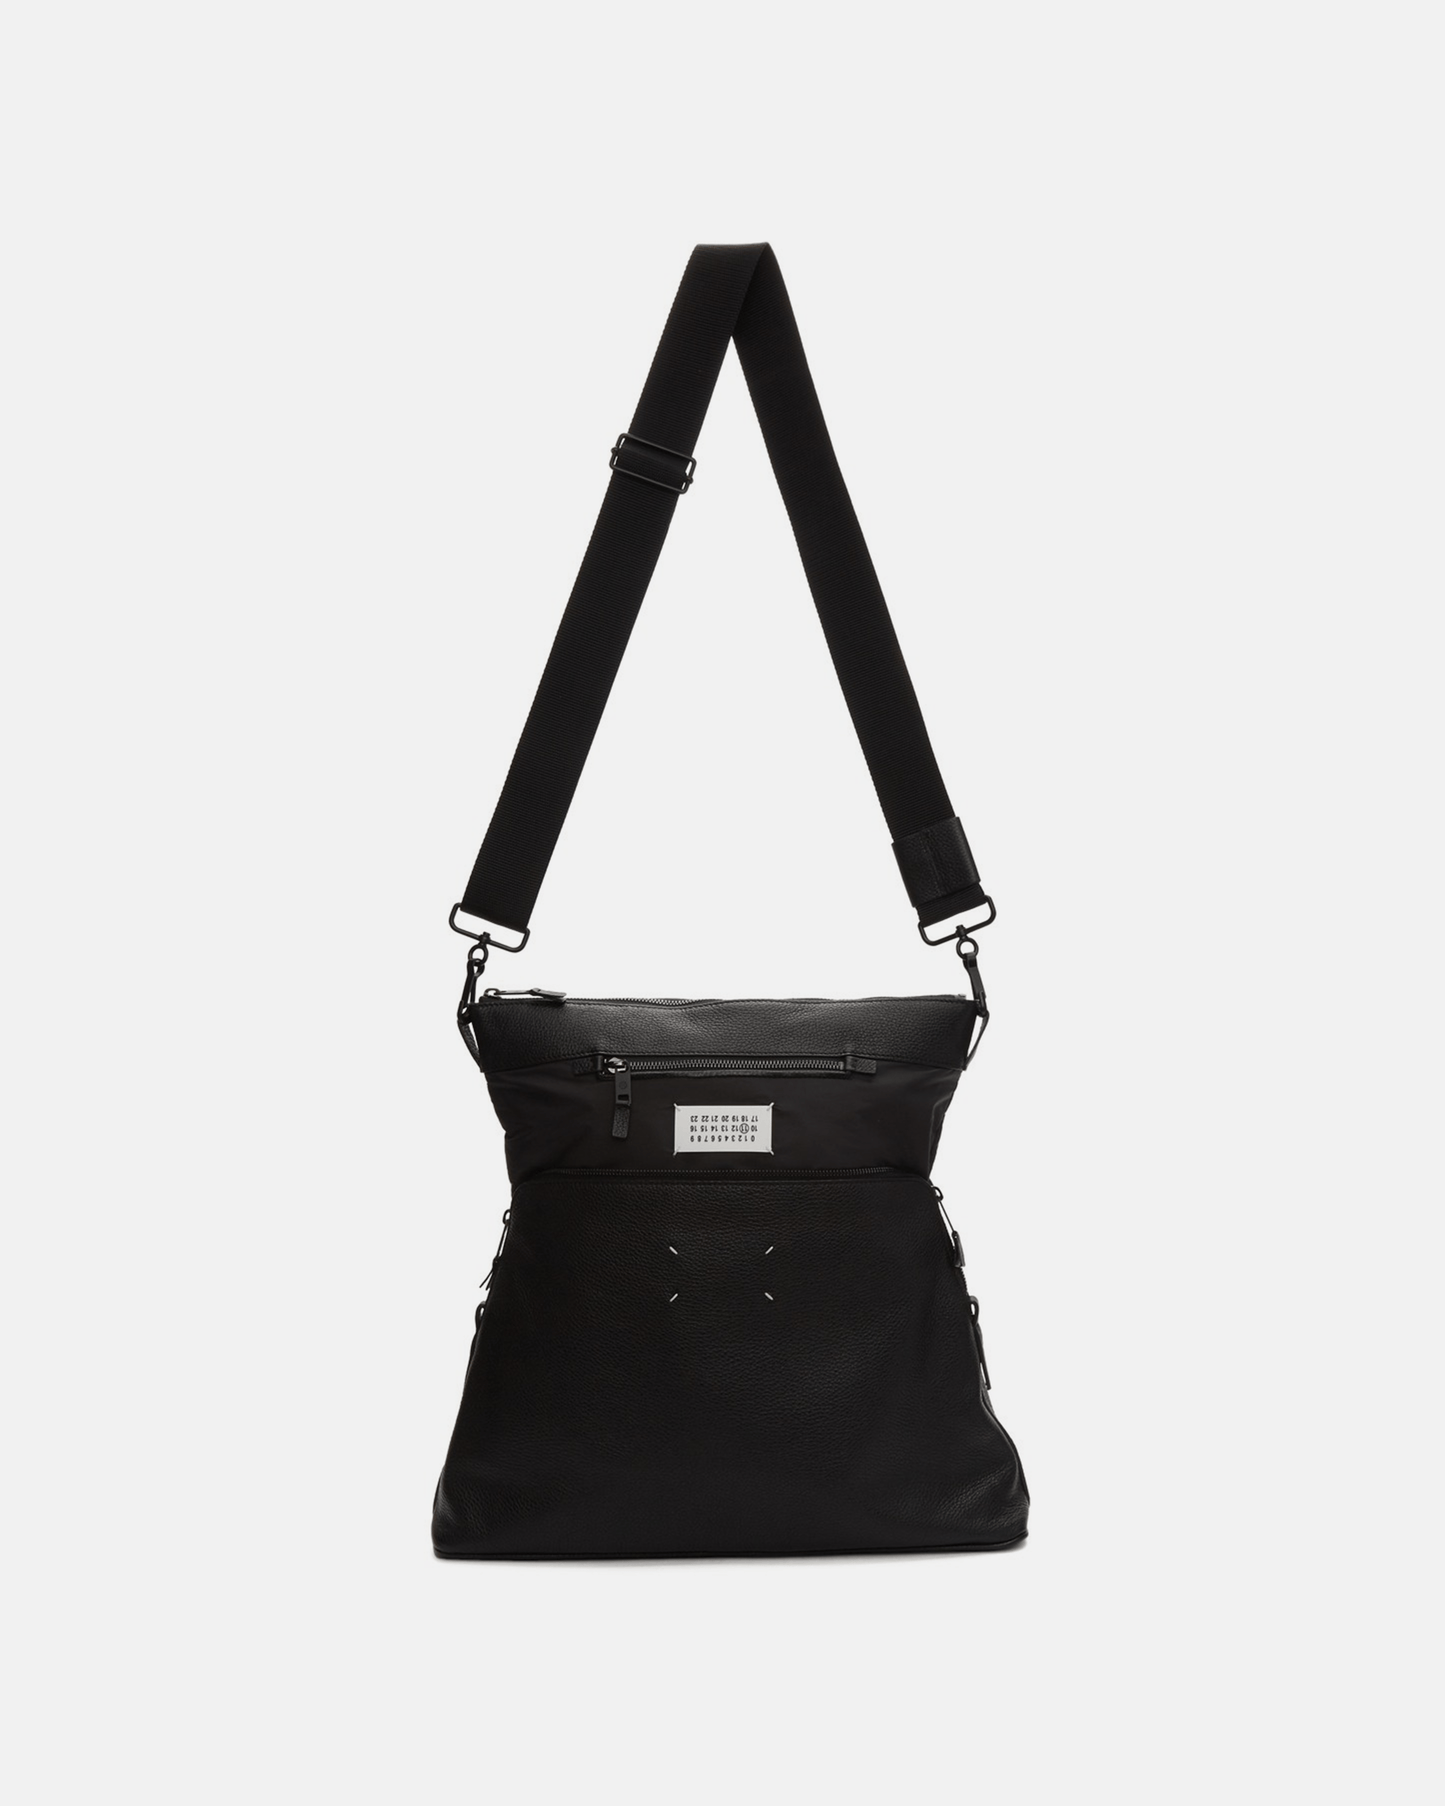 Maison Margiela Leather Goods 5AC Crossbody Bag in Black